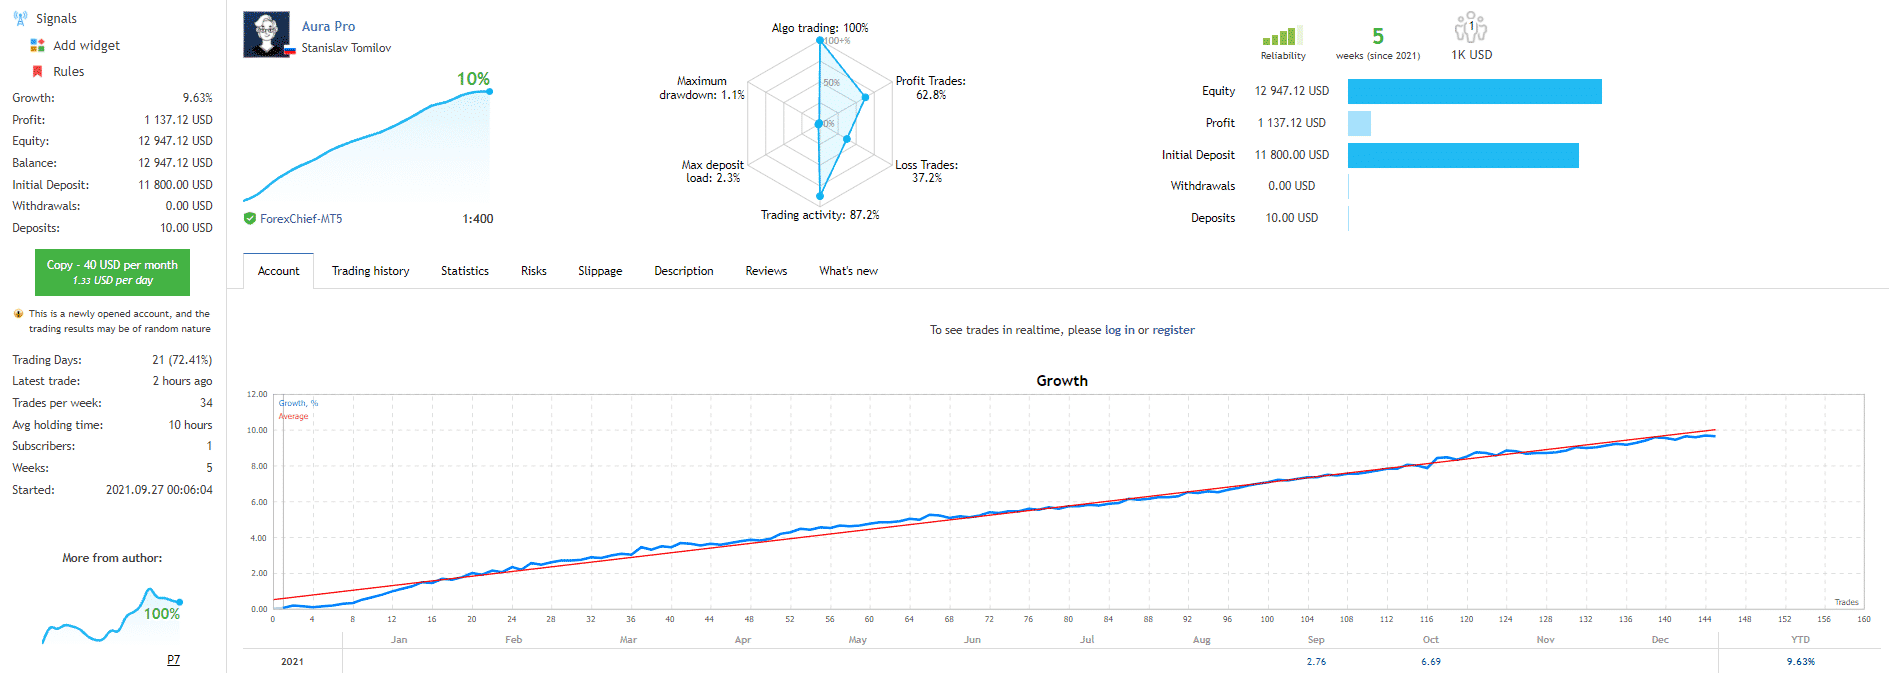 Growth chart of Aura Pro.